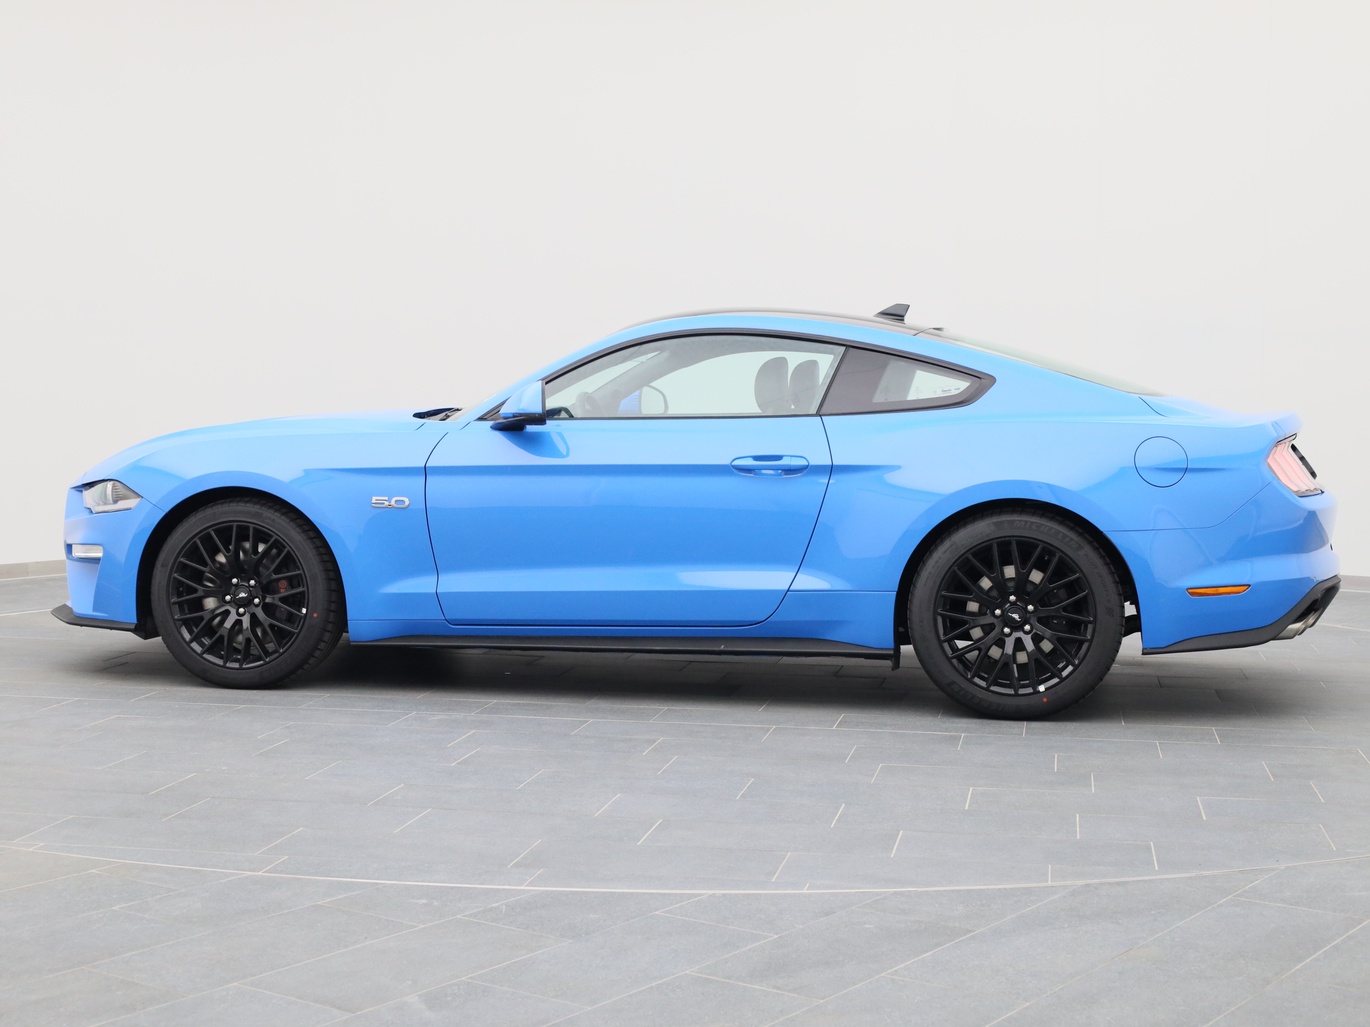  Ford Mustang GT Coupé V8 450PS / Premium 2 / Magne in Grabber Blue von Links